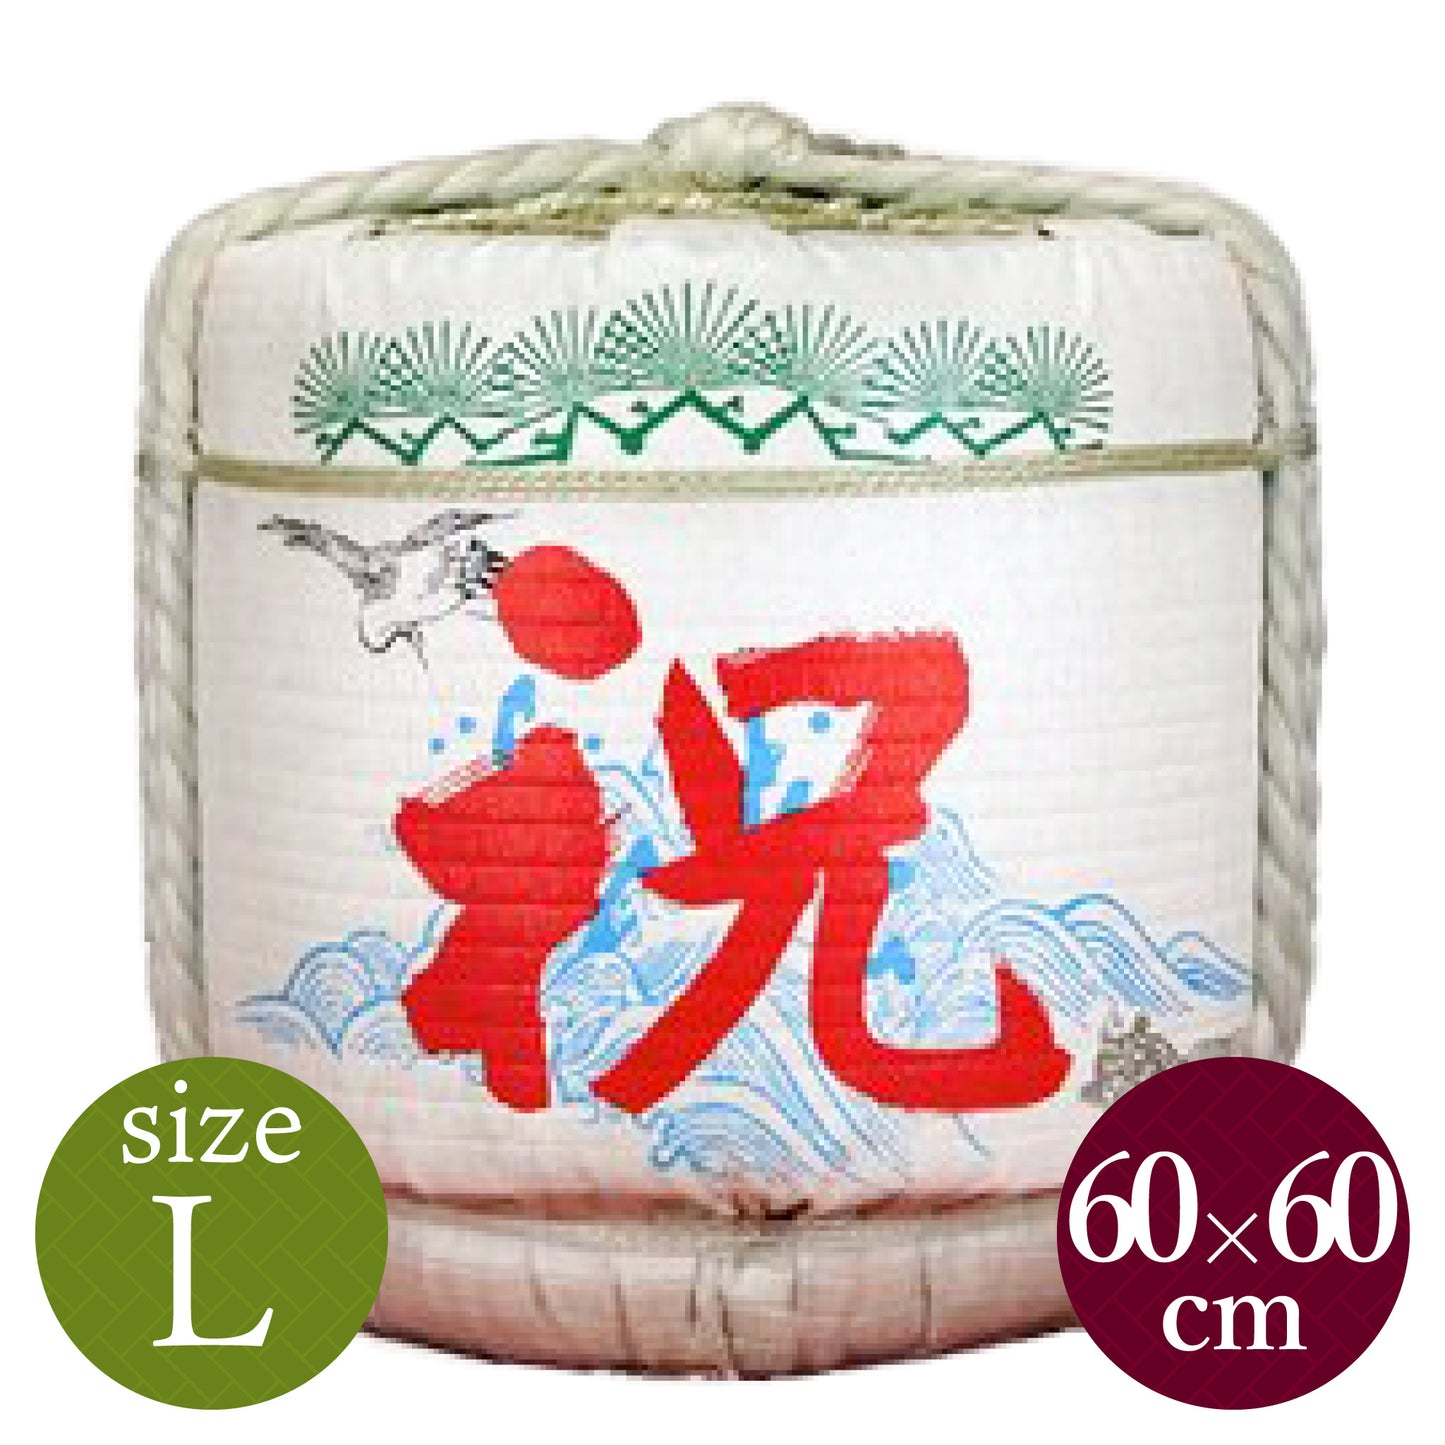 Decorative barrels for display Iwai-Tsurukame / Large size